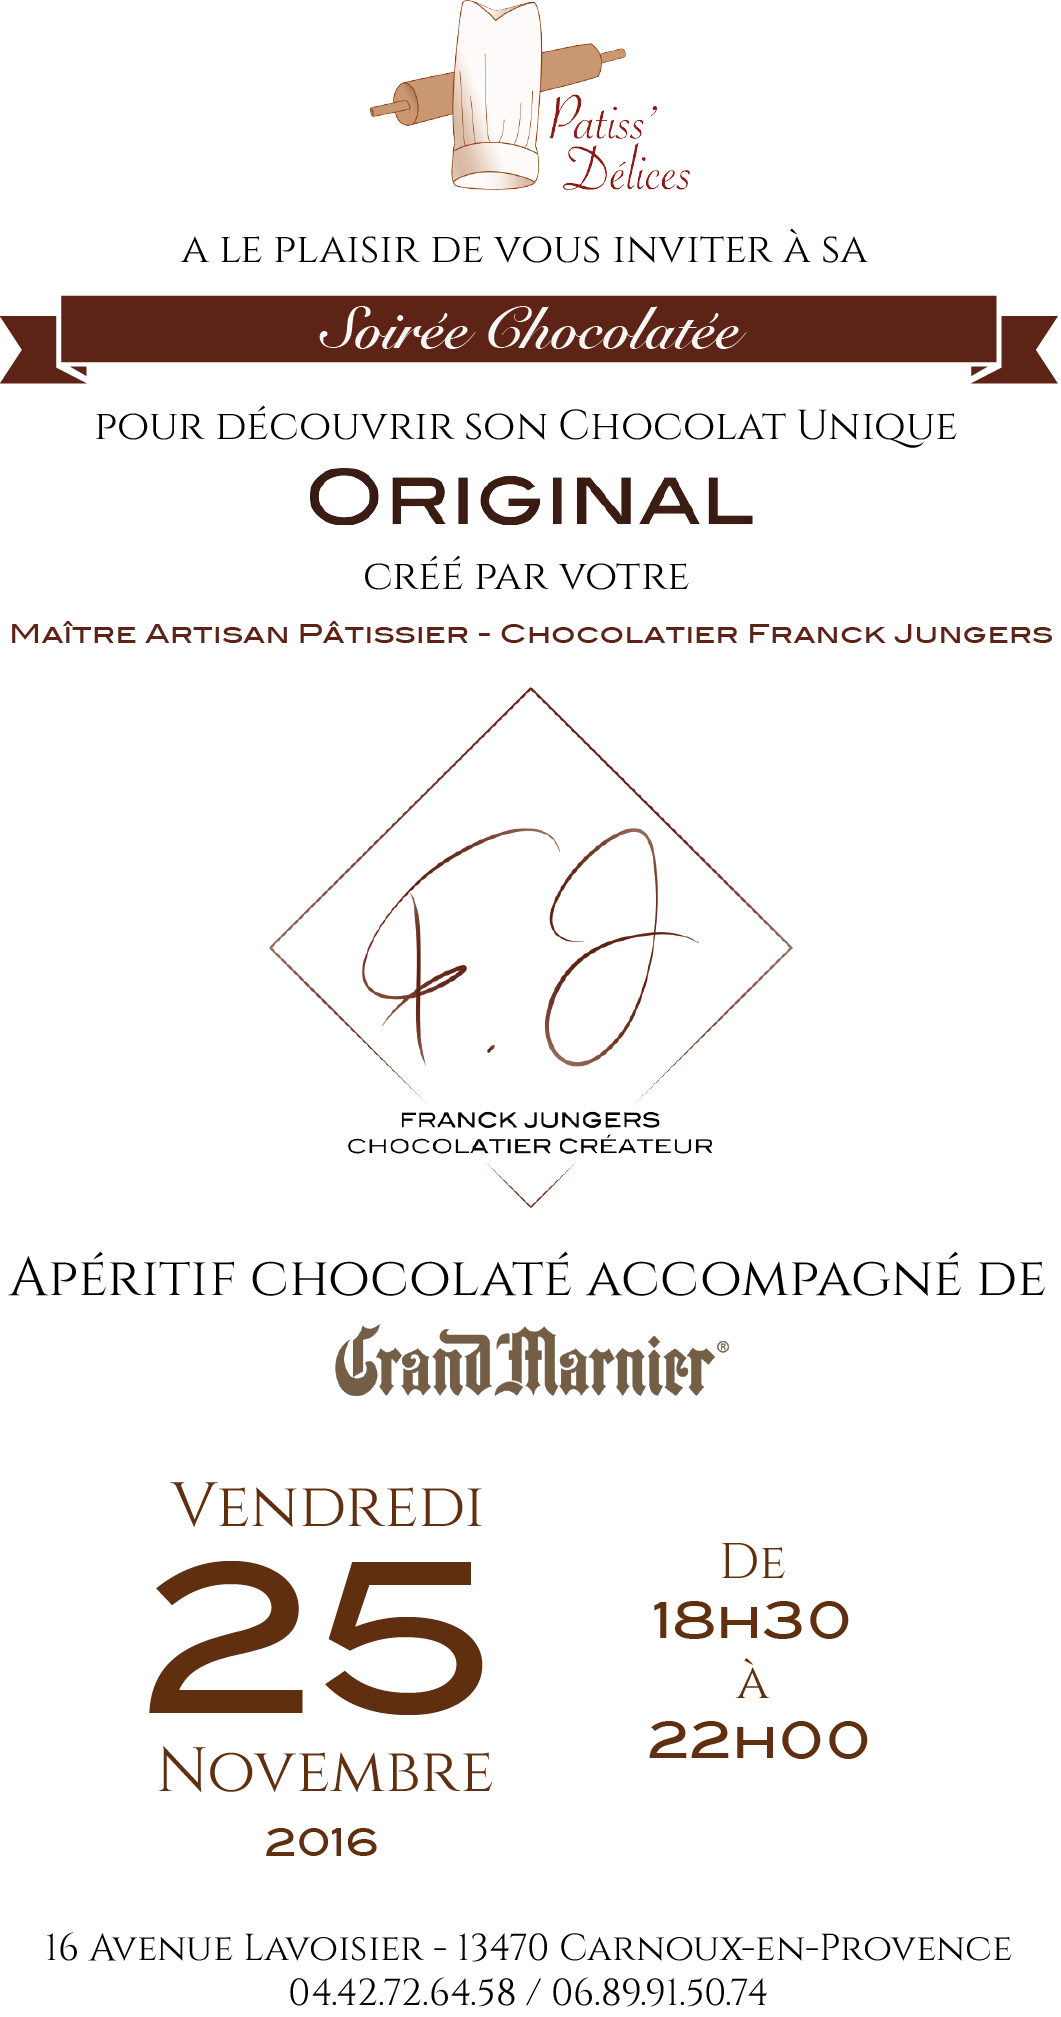 Soirée Chocolatée 2016